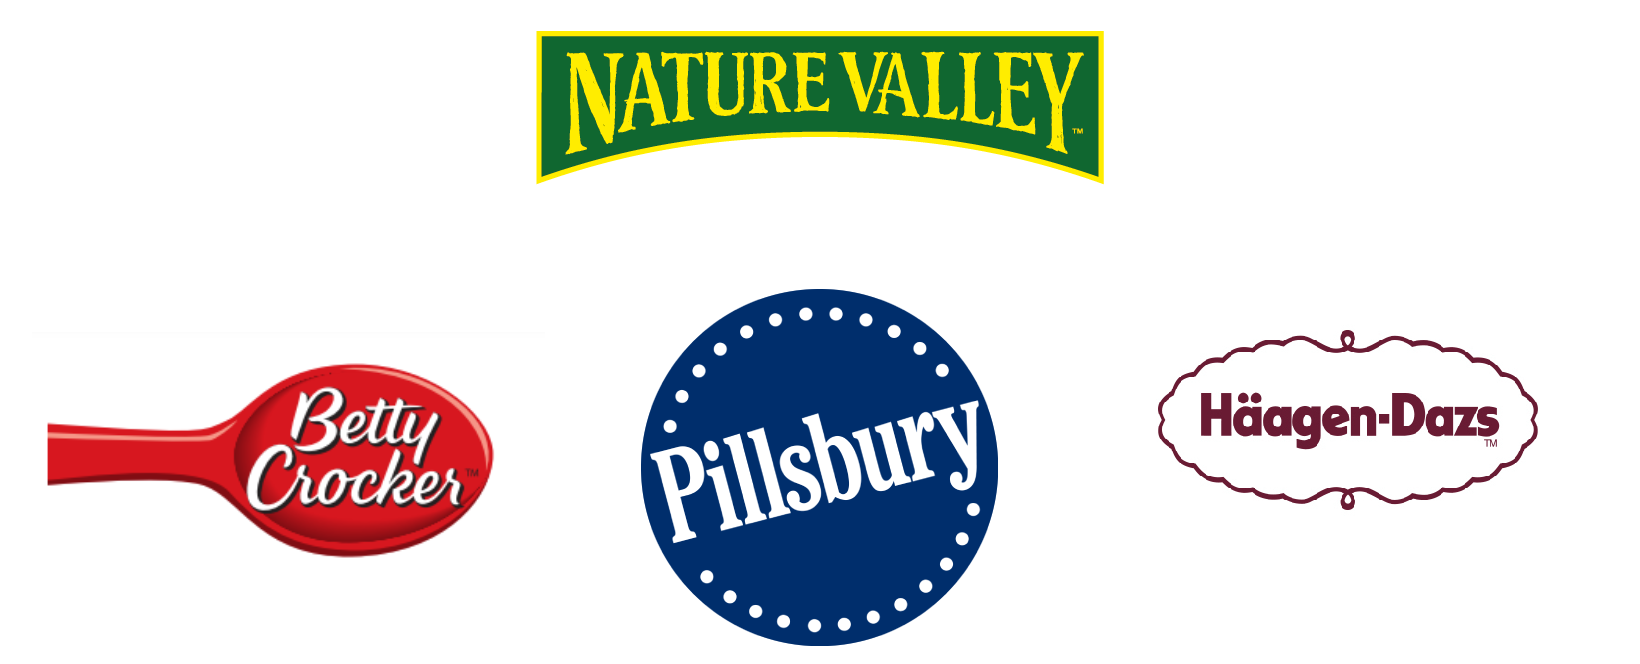 Betty Crockers, Pillsbury, Haagen Dazs and Nature Valley logo